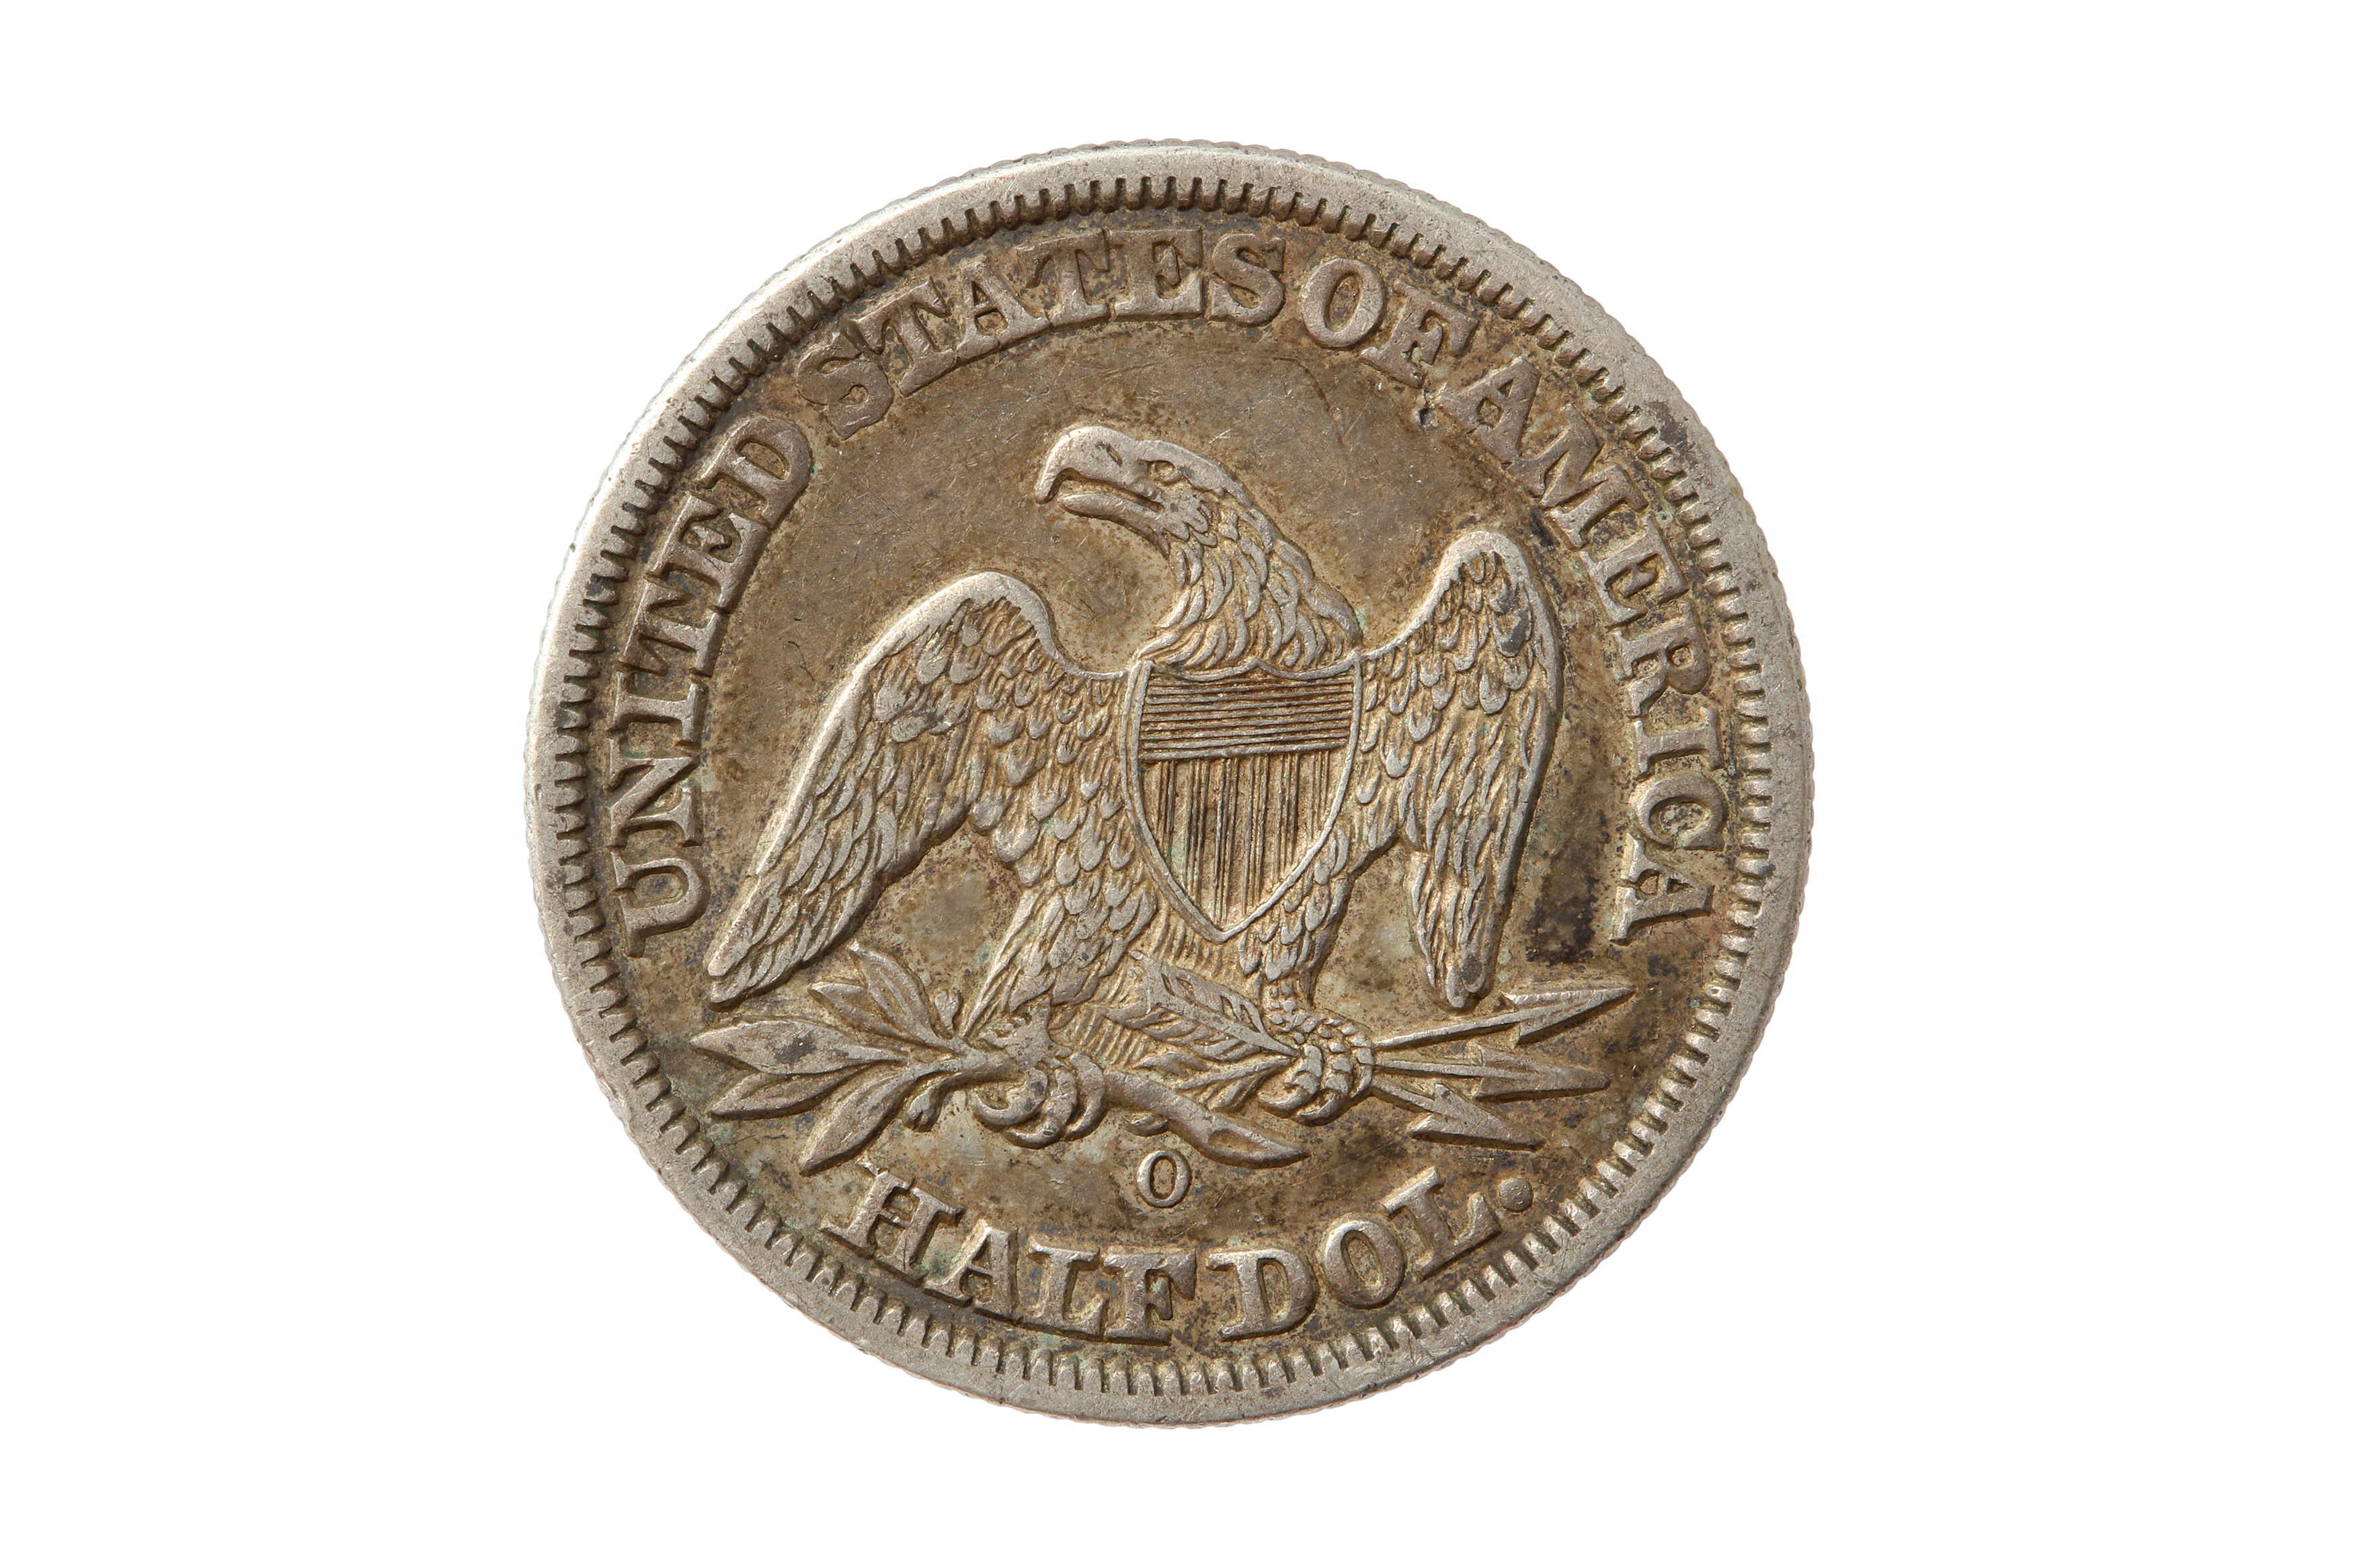 USA, 1857-O 50 CENTS/HALF DOLLAR. - Image 2 of 2